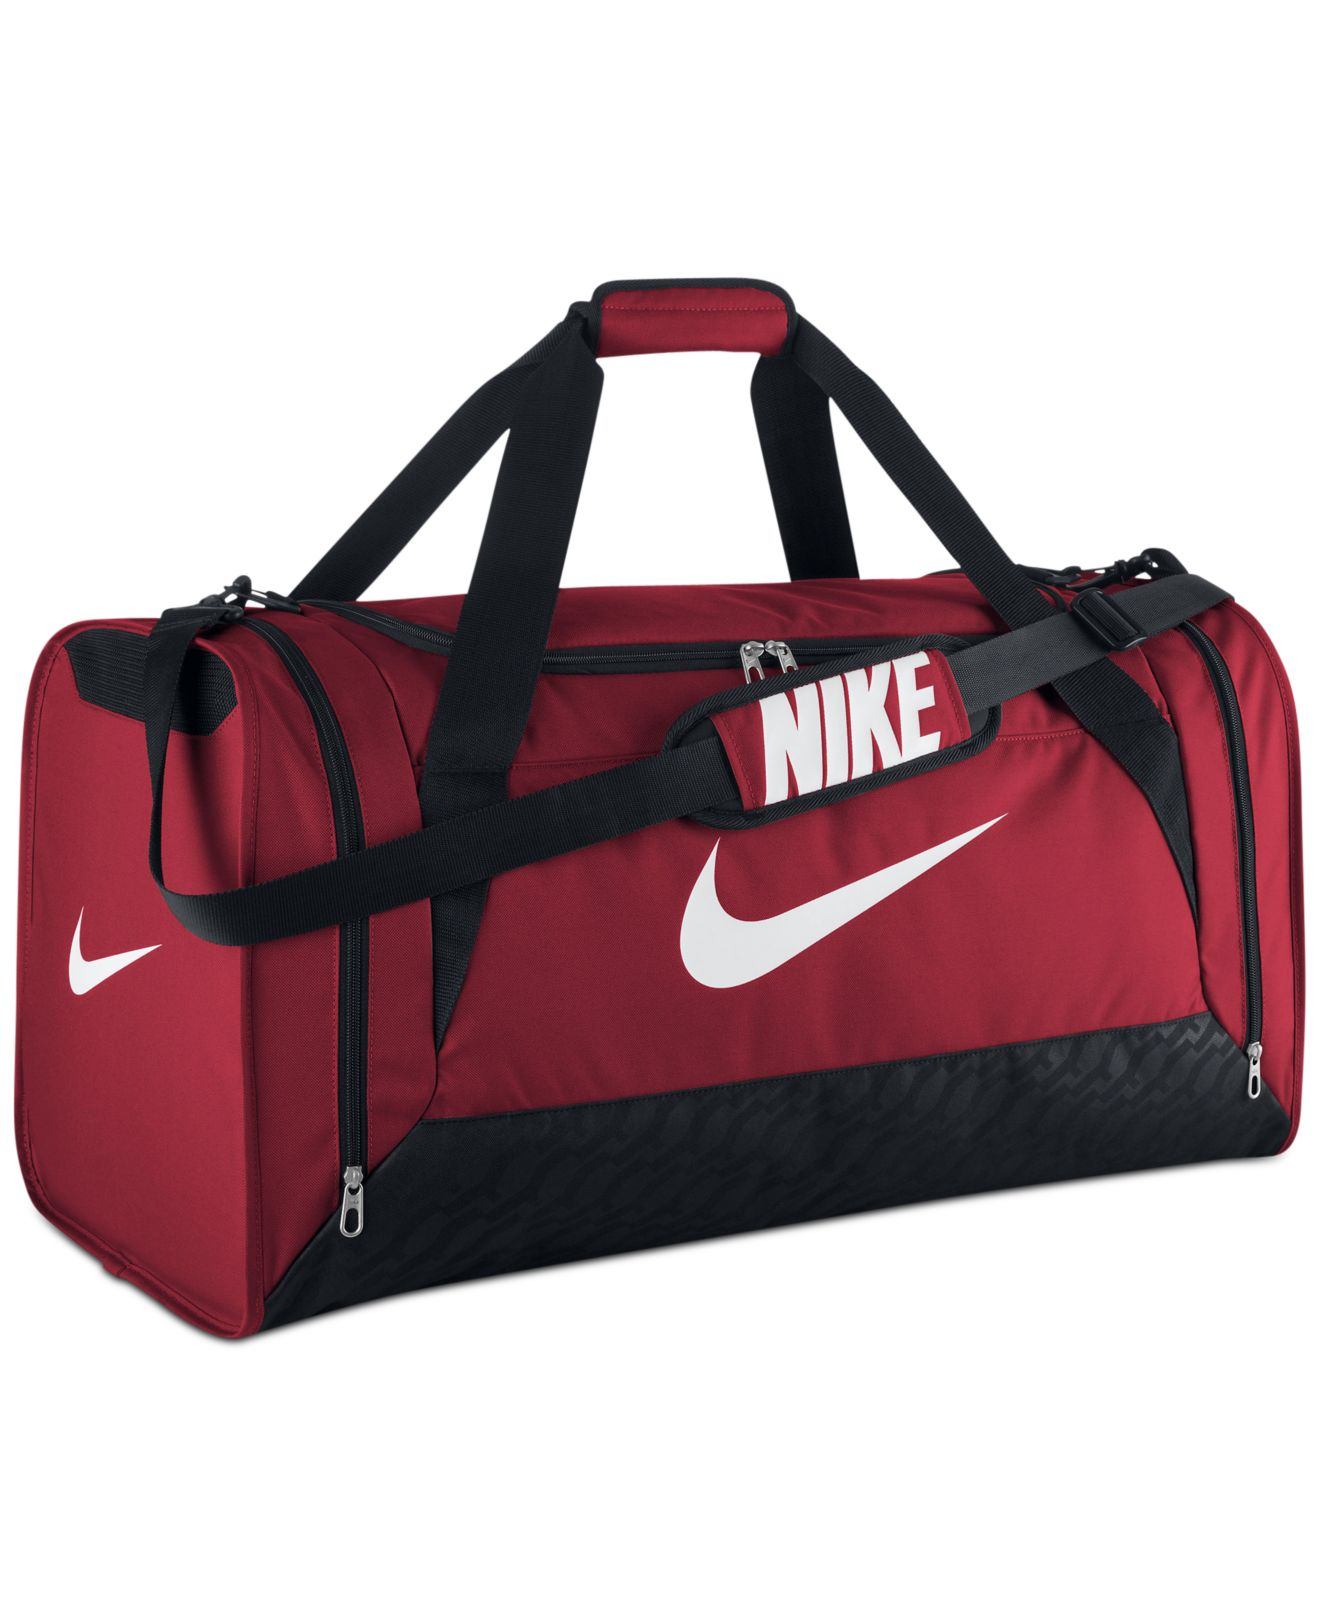 Lyst - Nike Brasilia 6 Large Duffle Bag in Red for Men